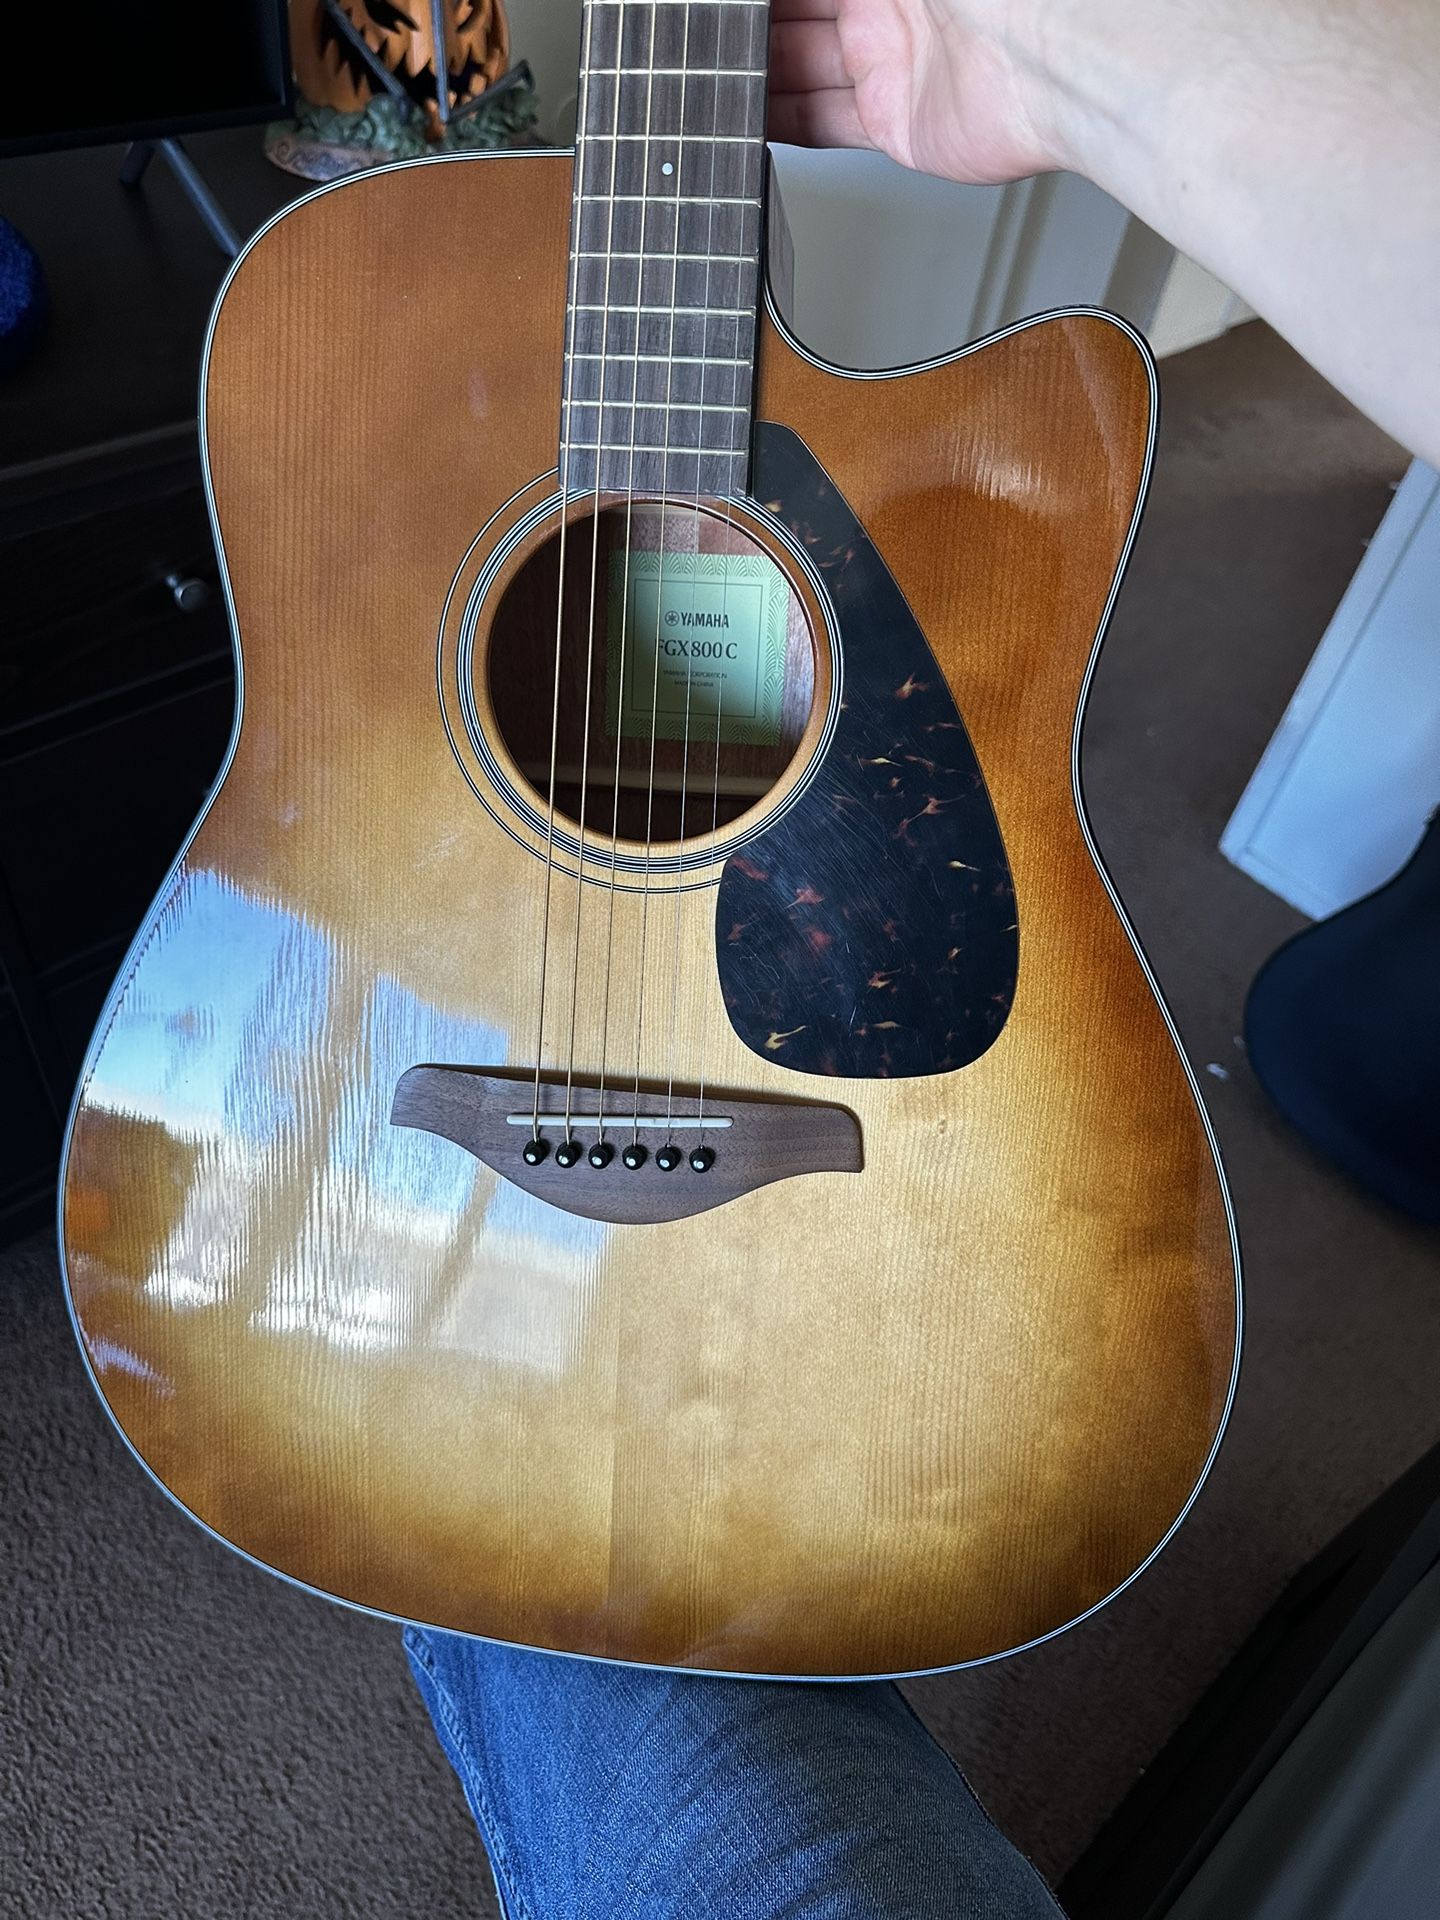 Yamaha FGX800C Acoustic-Electric Guitar SANDBURST COLOR (with Case!)